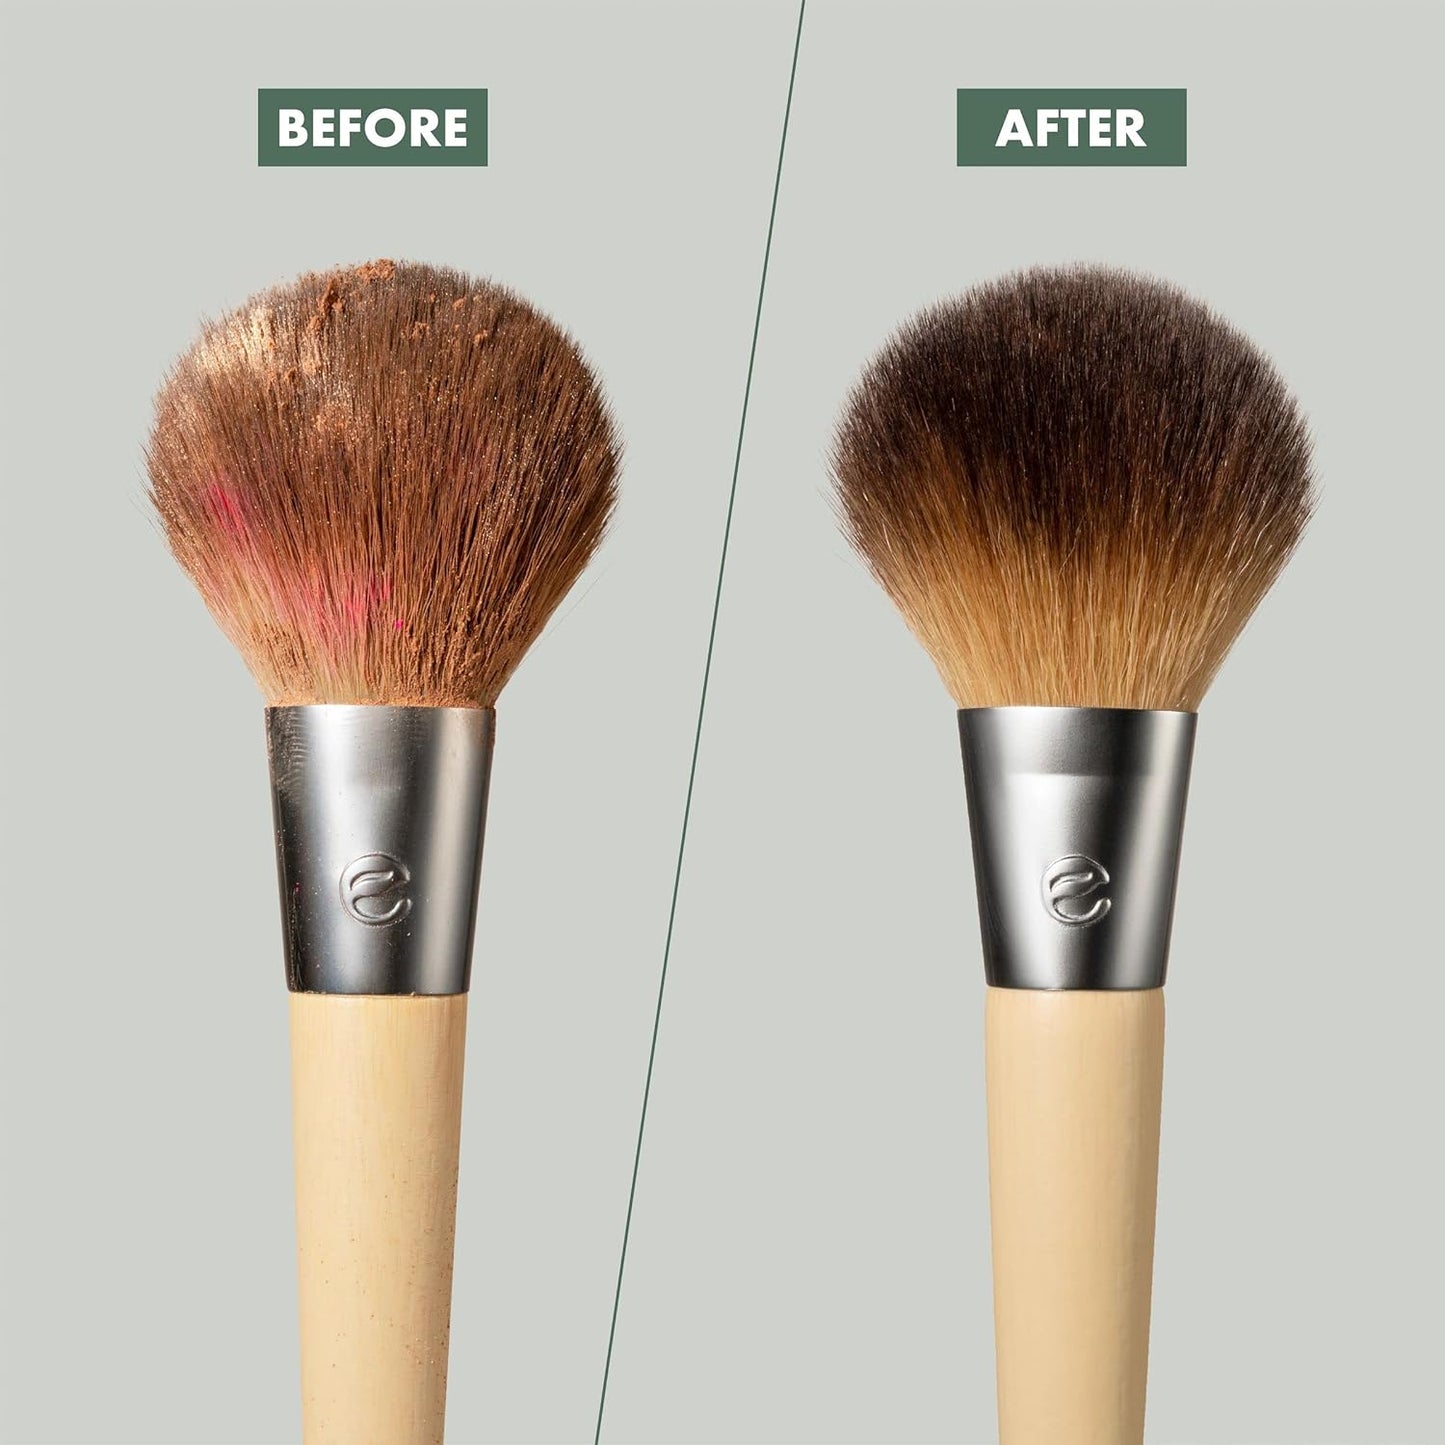 EcoTools Makeup Brush and Sponge Shampoo